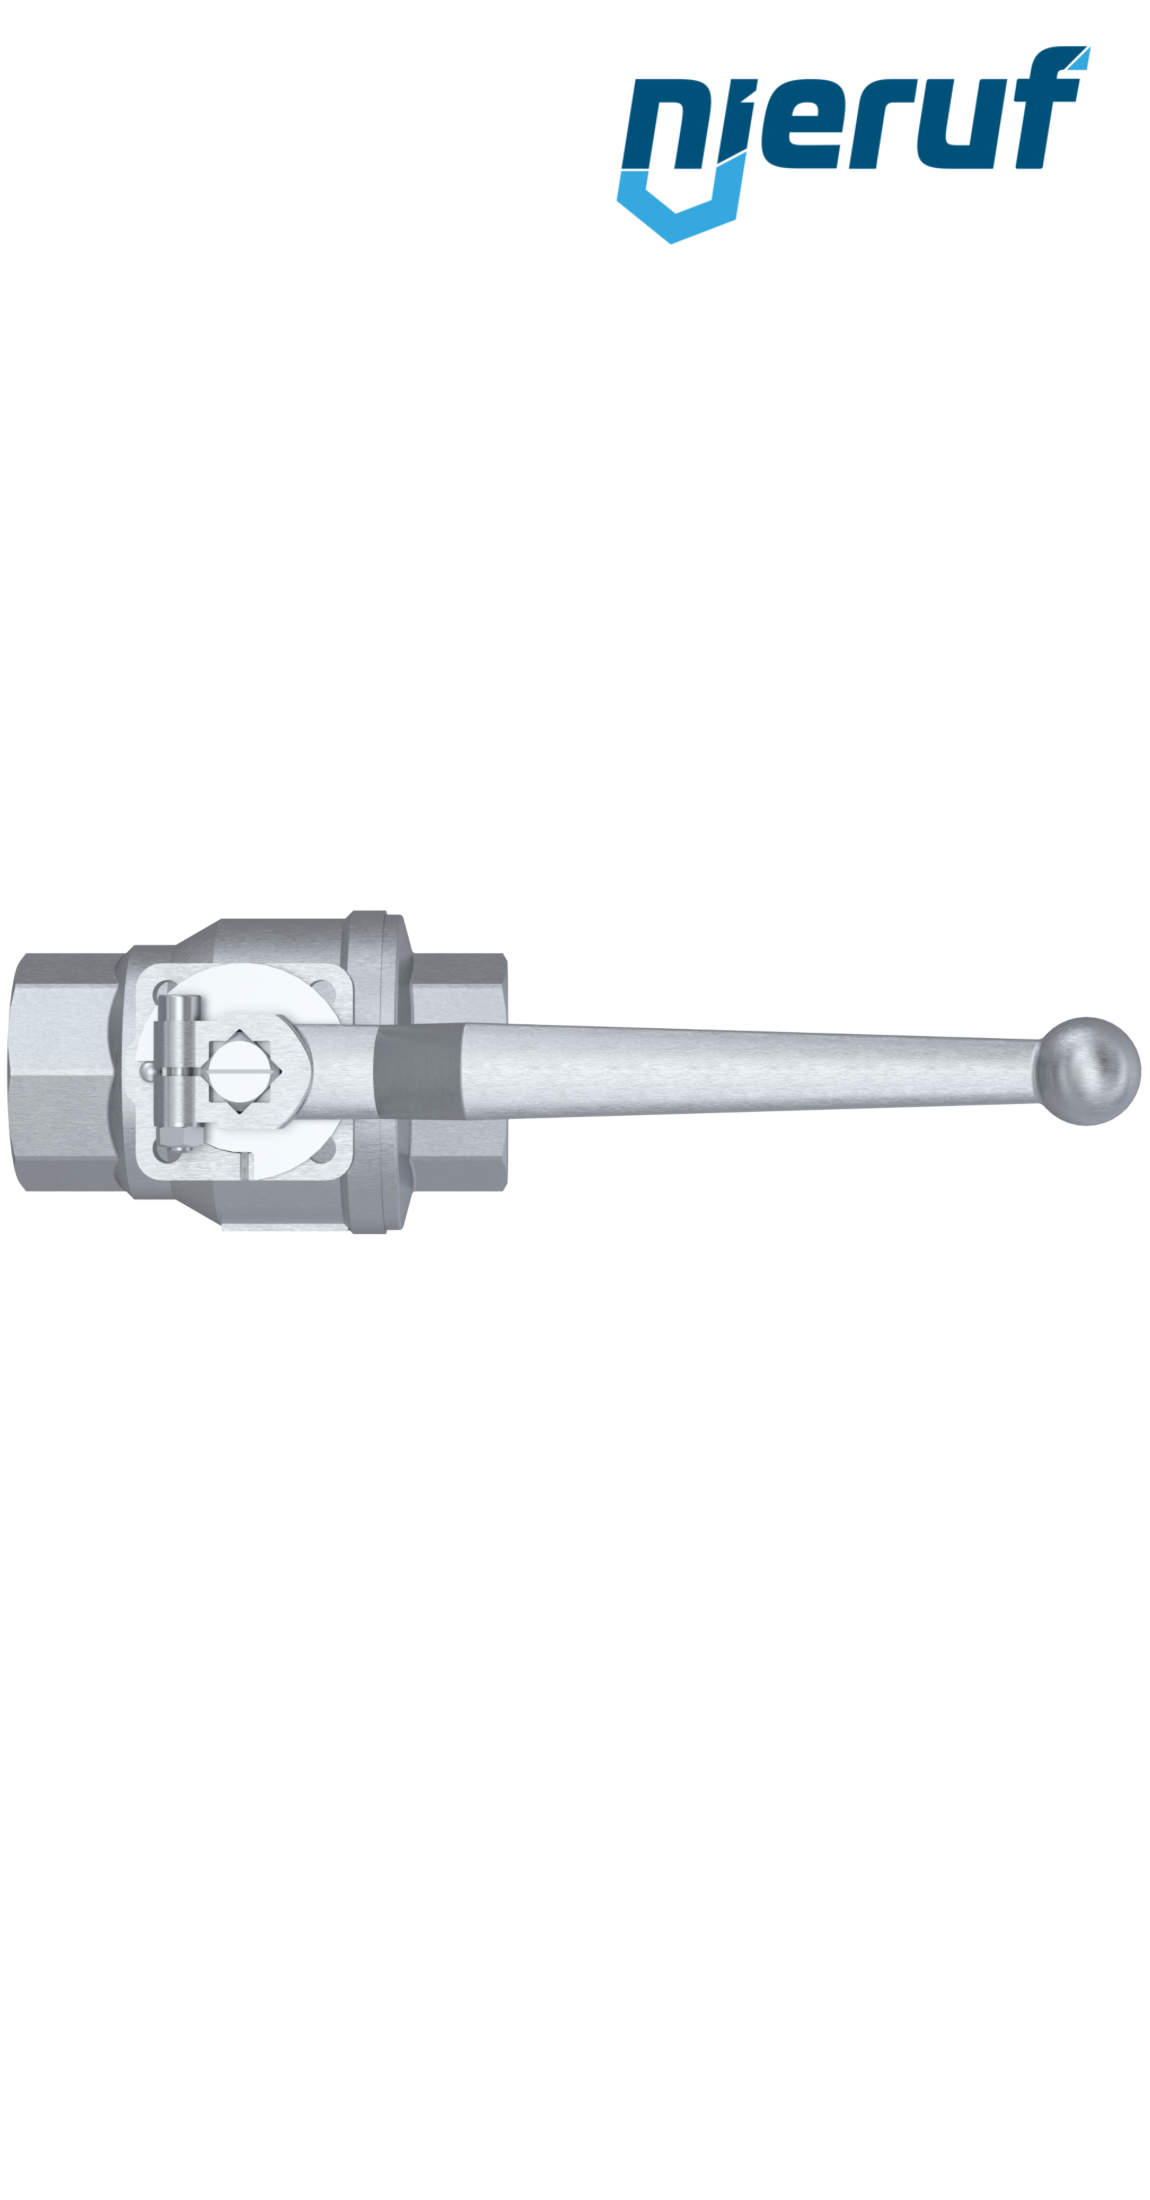 High pressure ball valve DN50 - 2" inch GK06